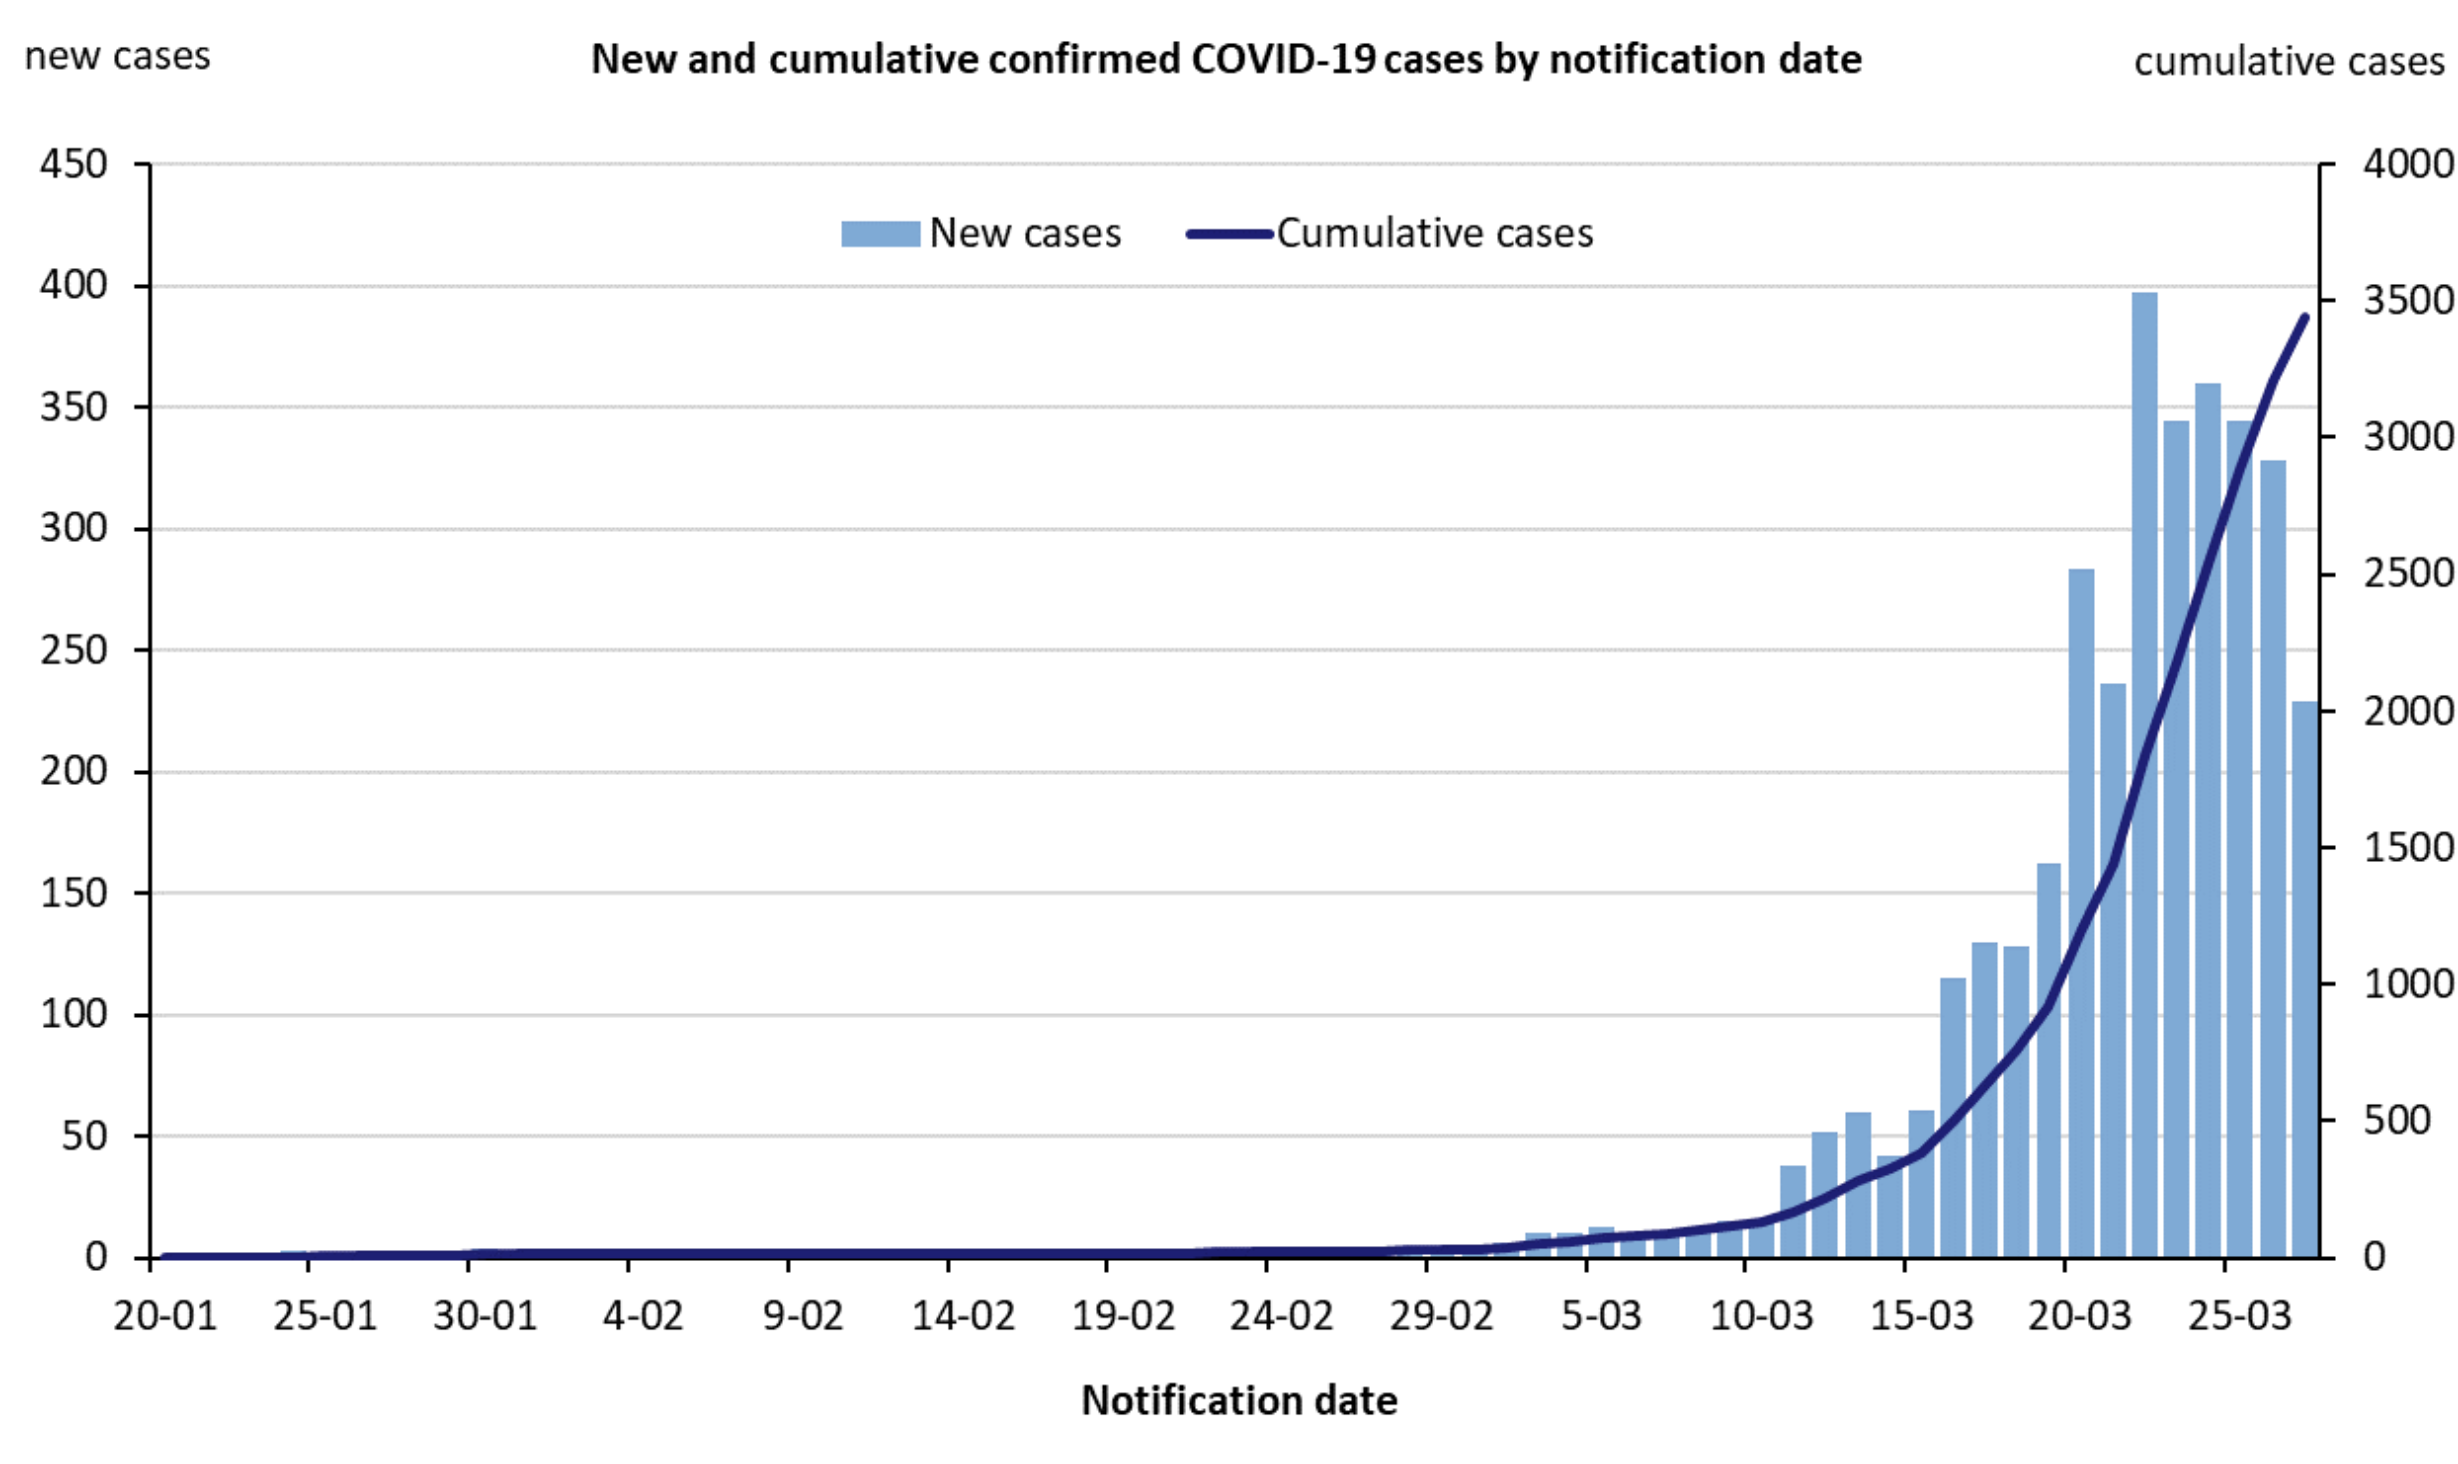 New and cumulative COVID-19 cases in Australia